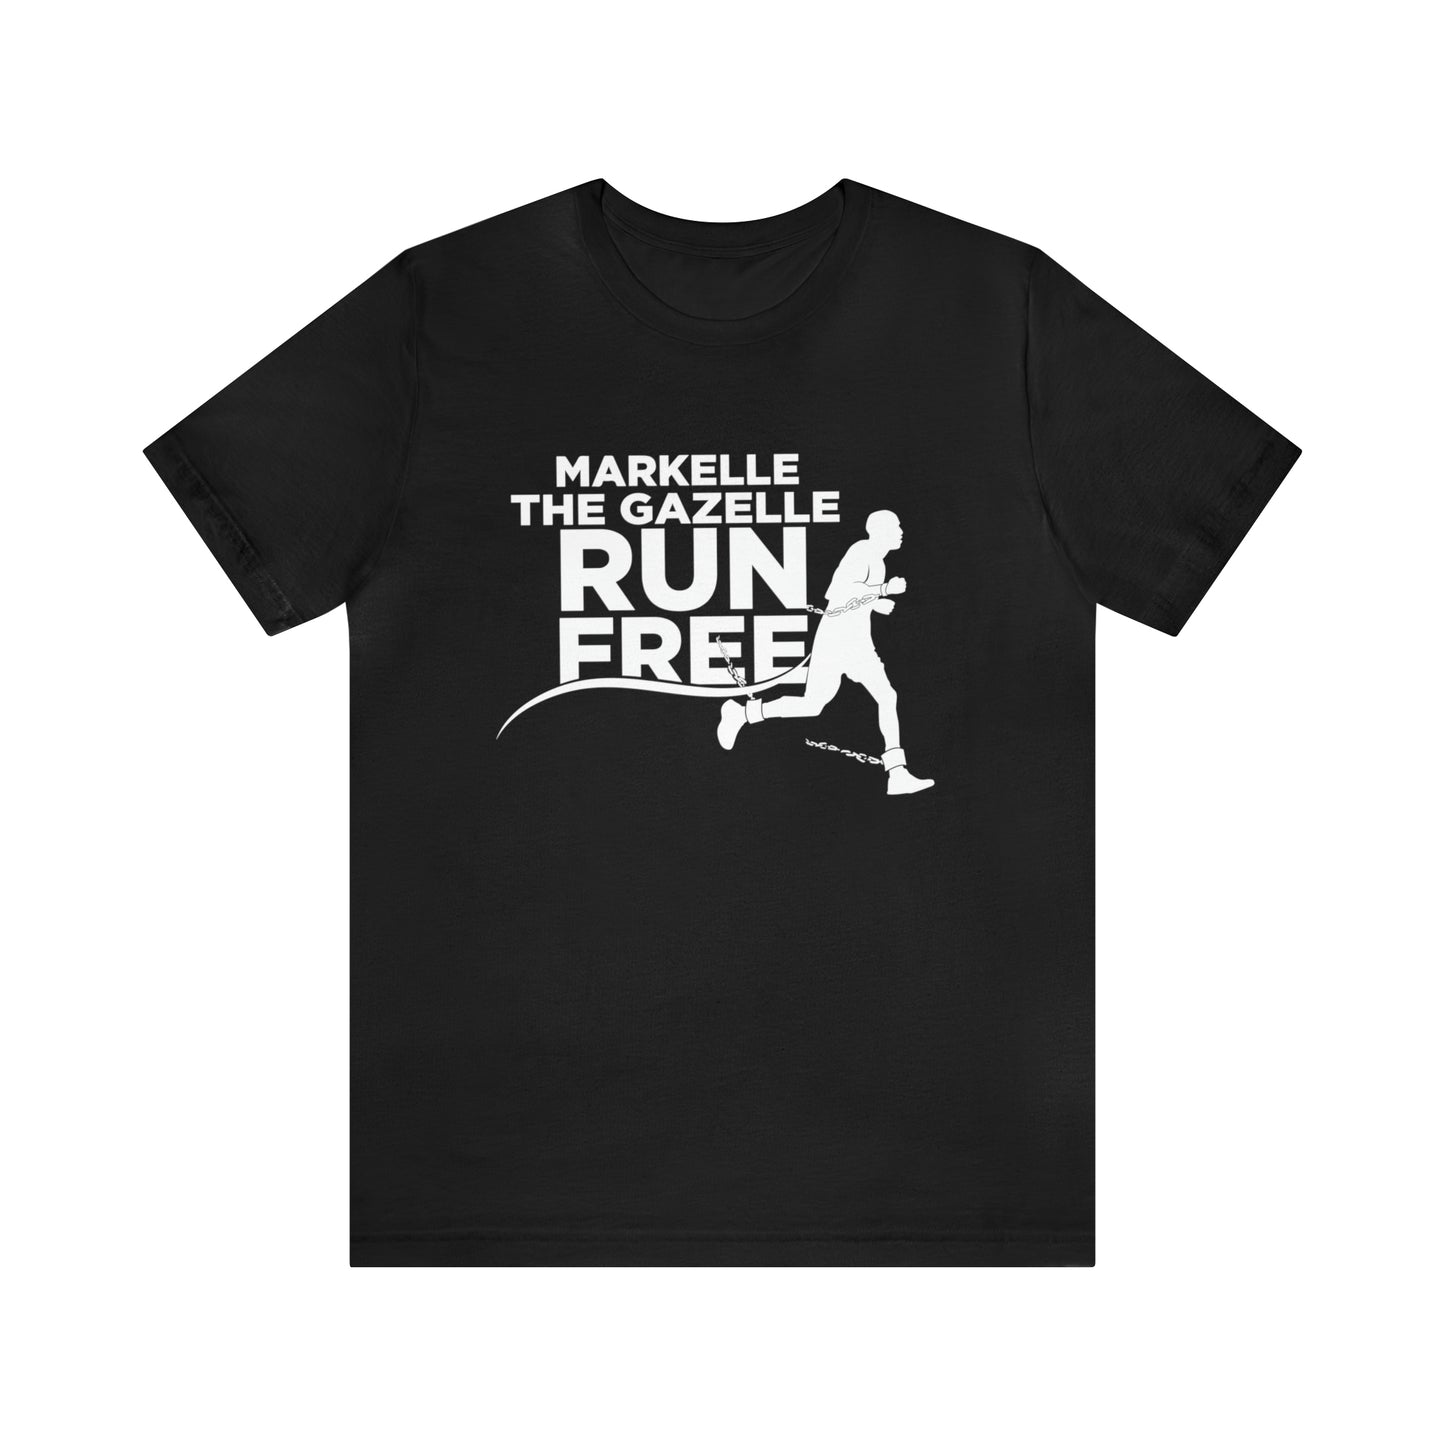 Markelle the Gazelle RUN FREE T-Shirt - More at MarkelleTheGazelle.com